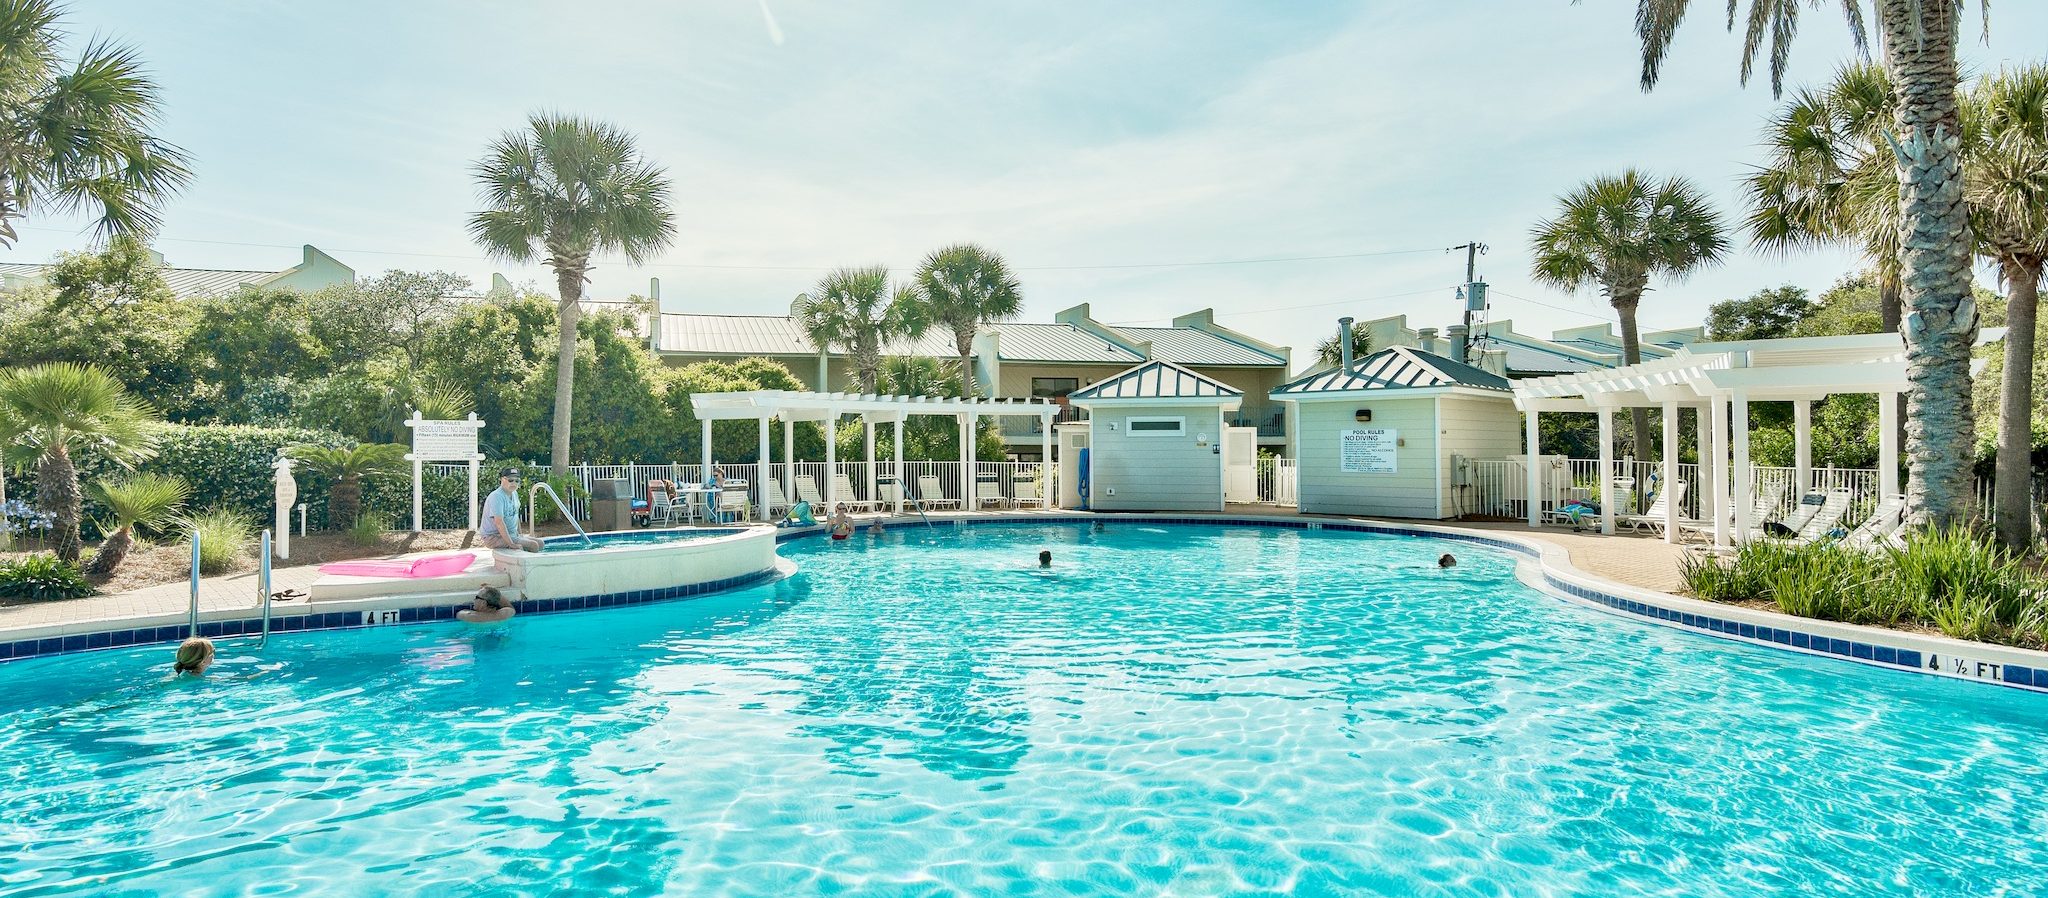 We have short term condo rentals at Beach Retreat resort in Destin, FL.